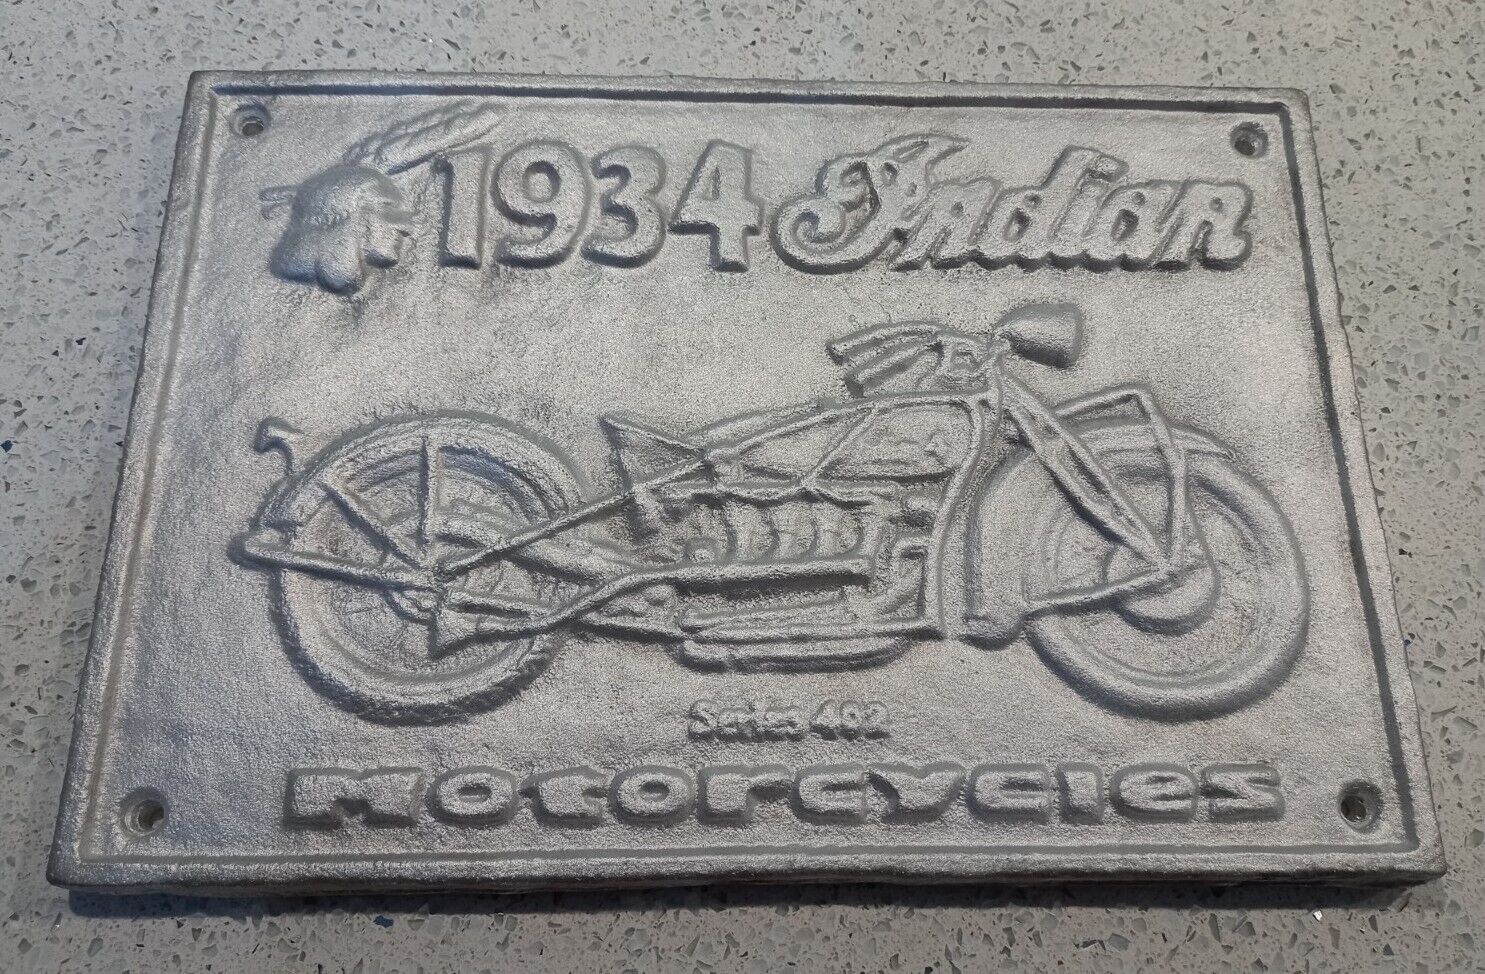 1934 Indian motorcycles cast aluminium sign plaque man cave decoration not iron